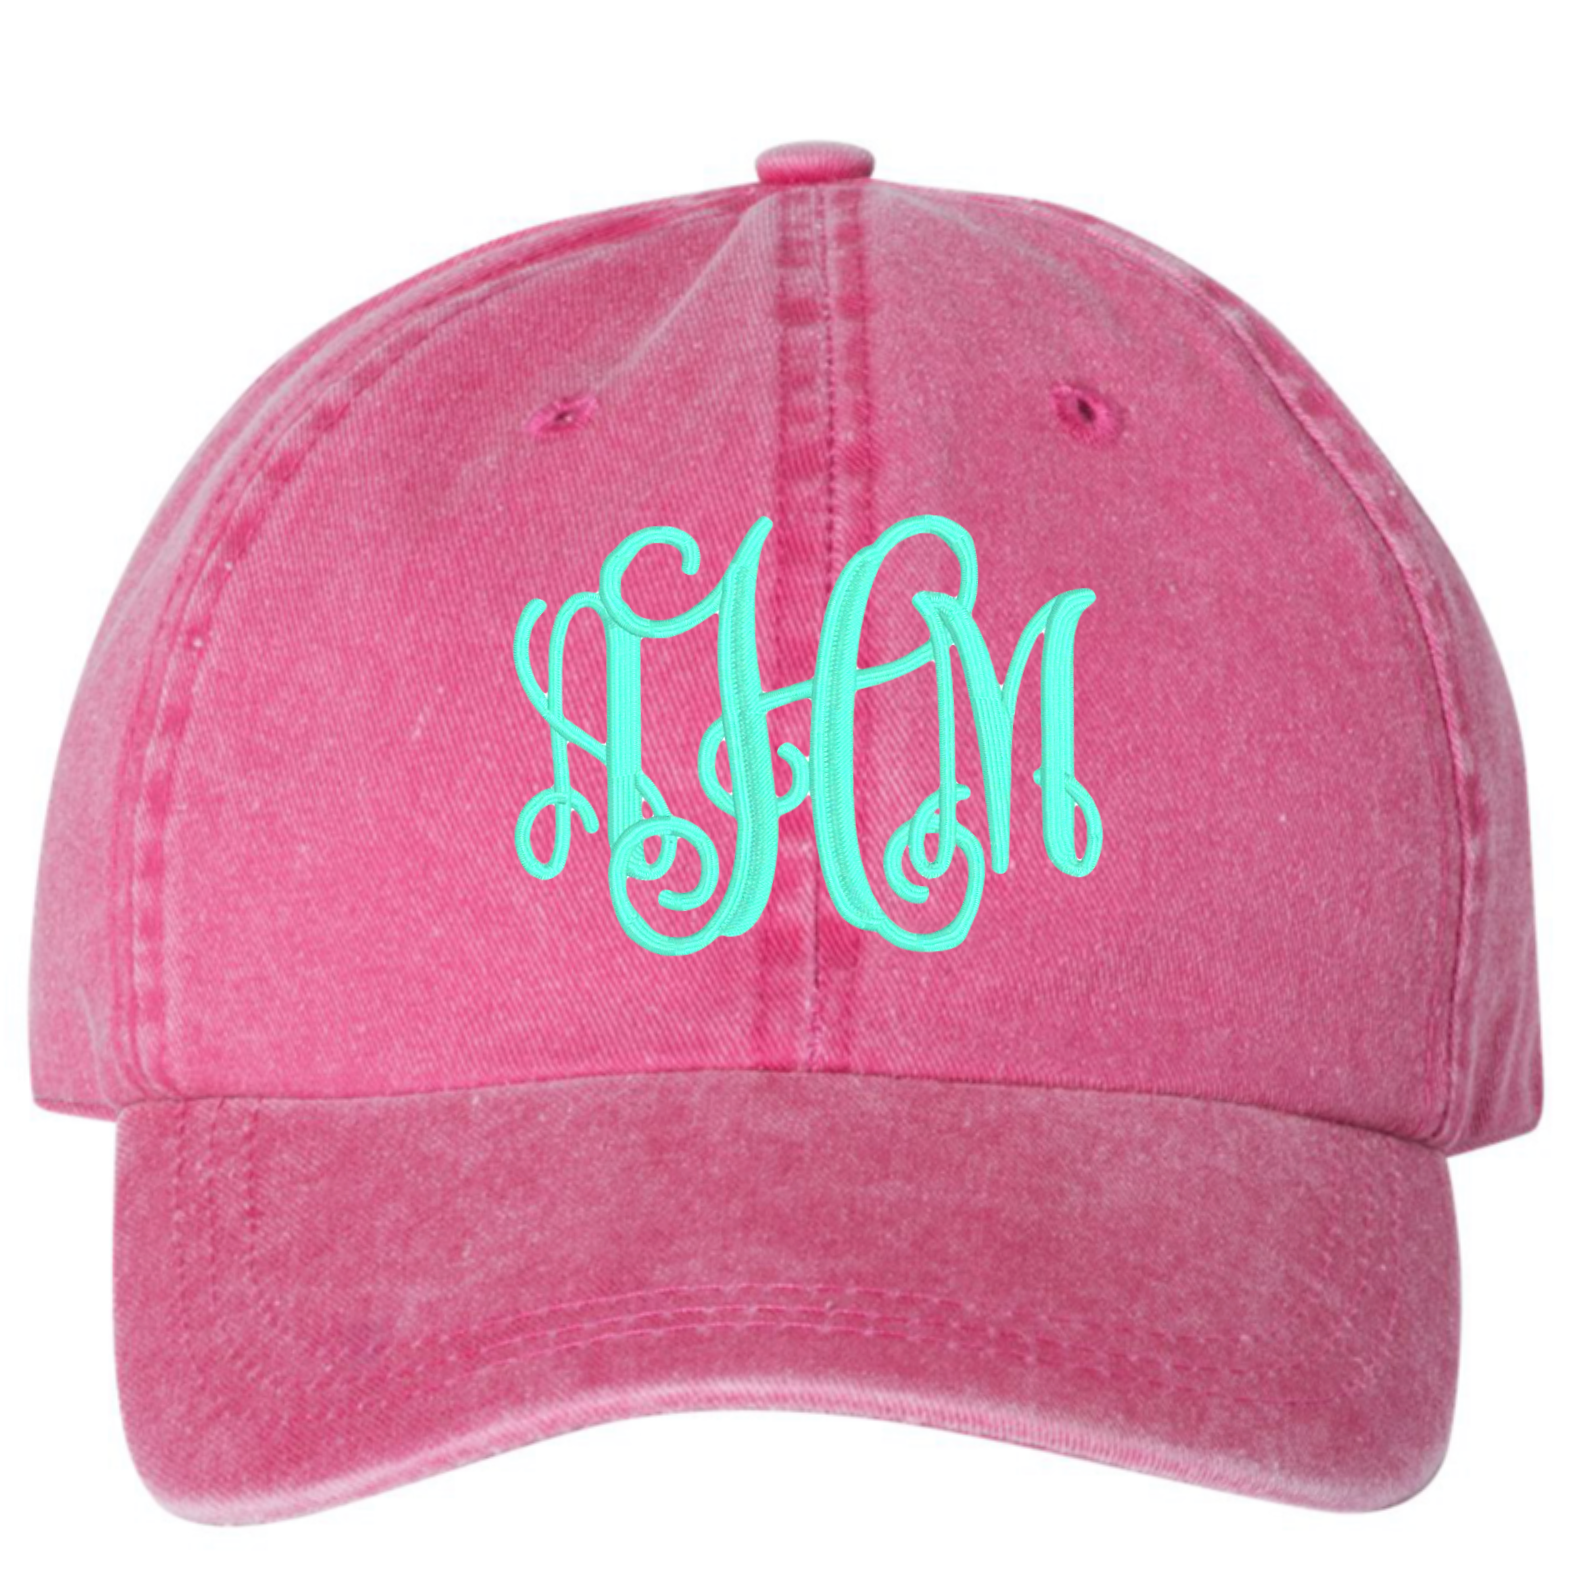 Embroidered Monogram  Hat Mineral Wash Hot Pink